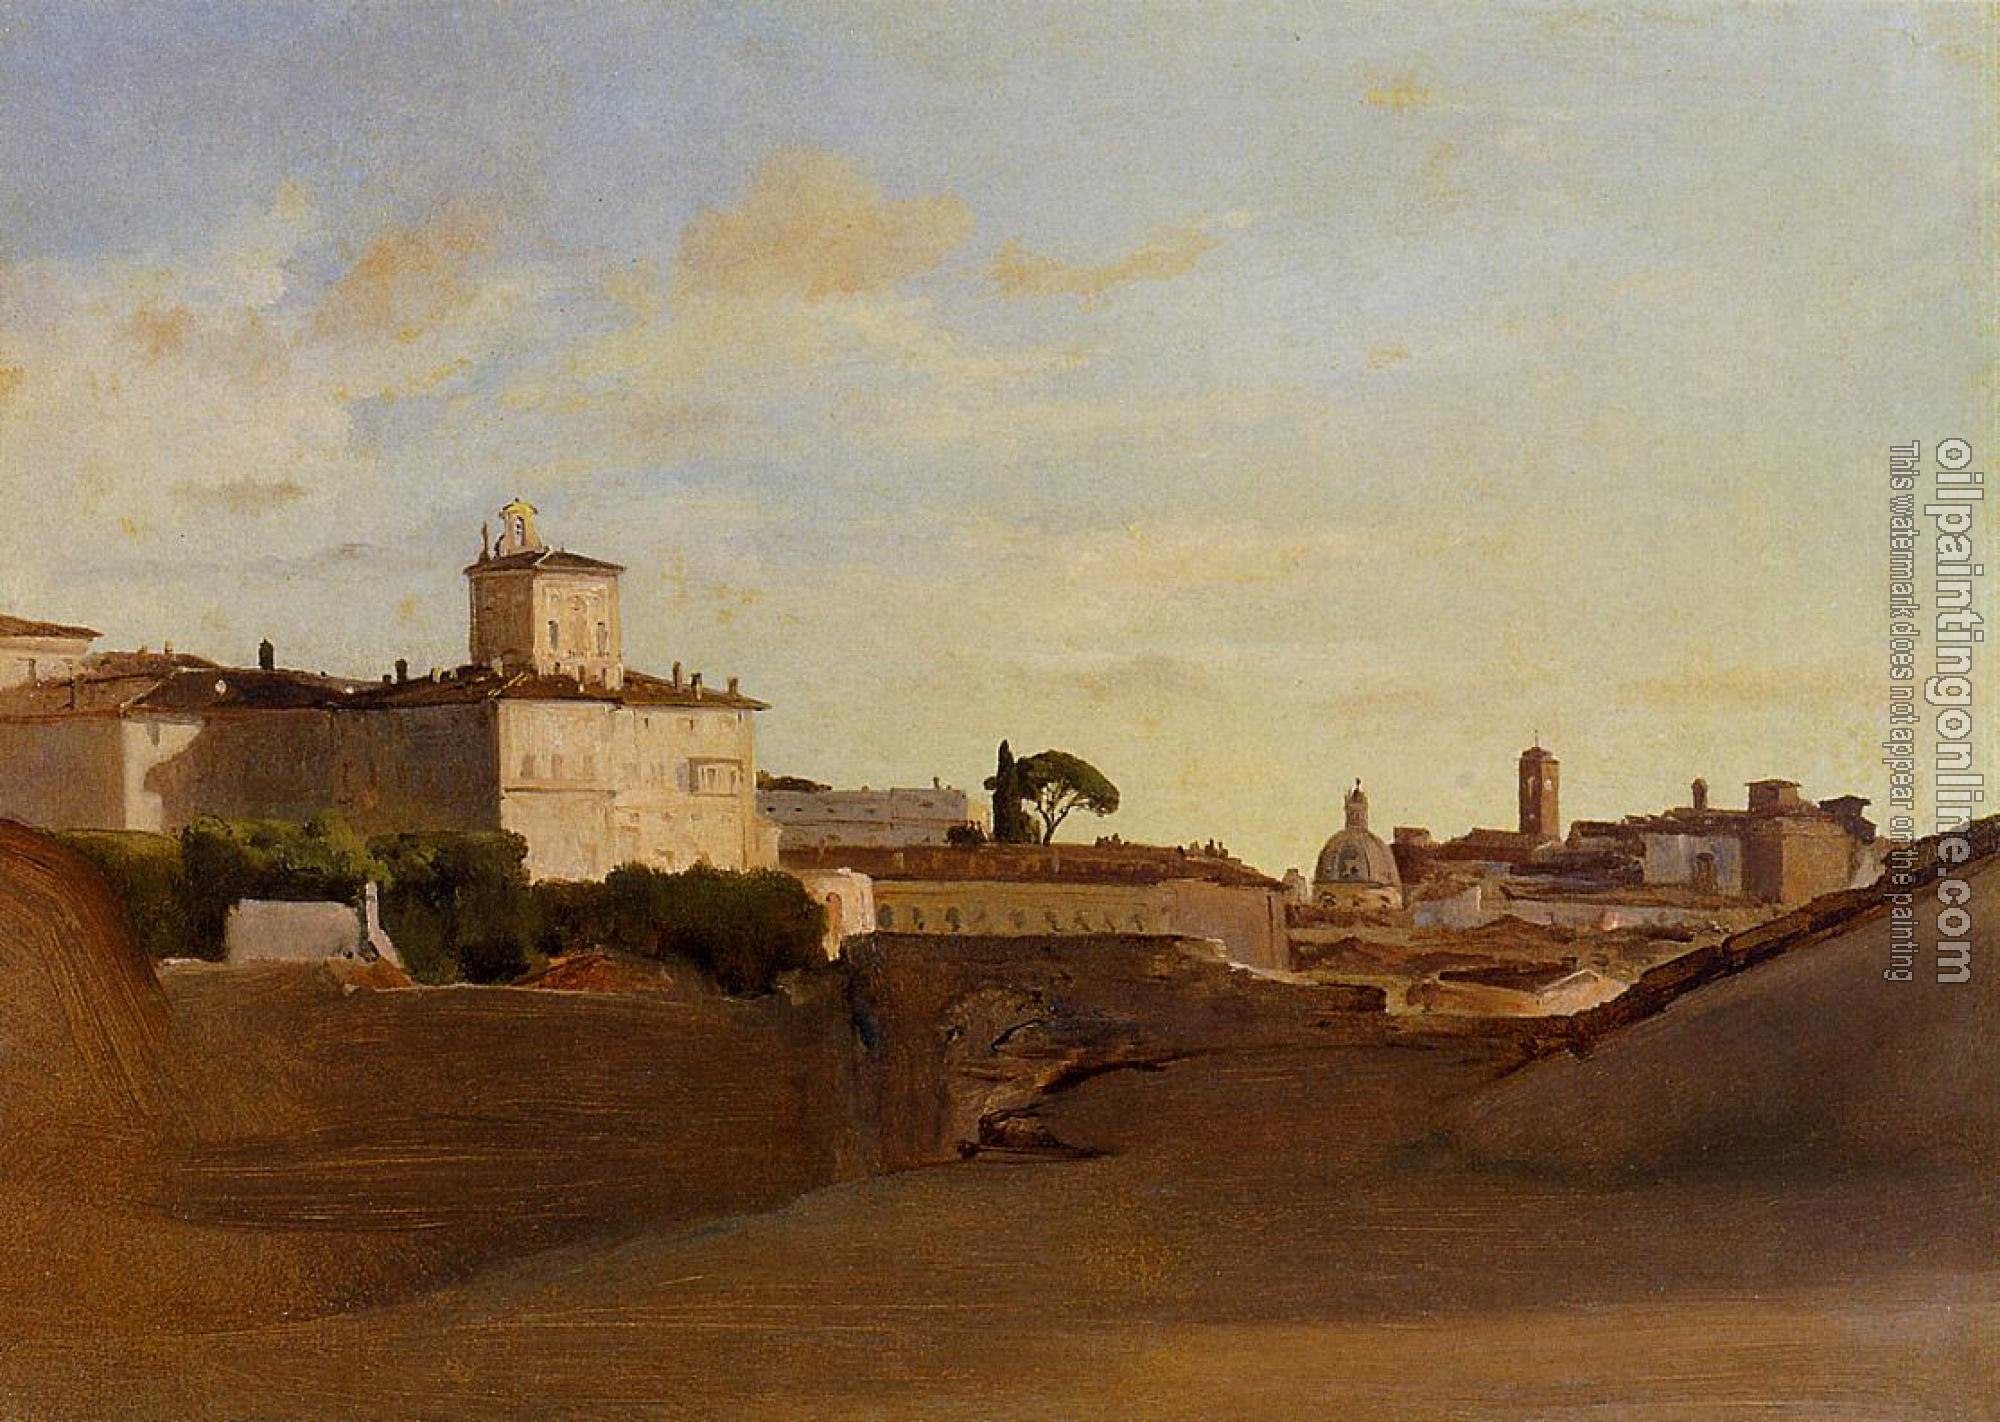 Corot, Jean-Baptiste-Camille - View of Pincio, Italy